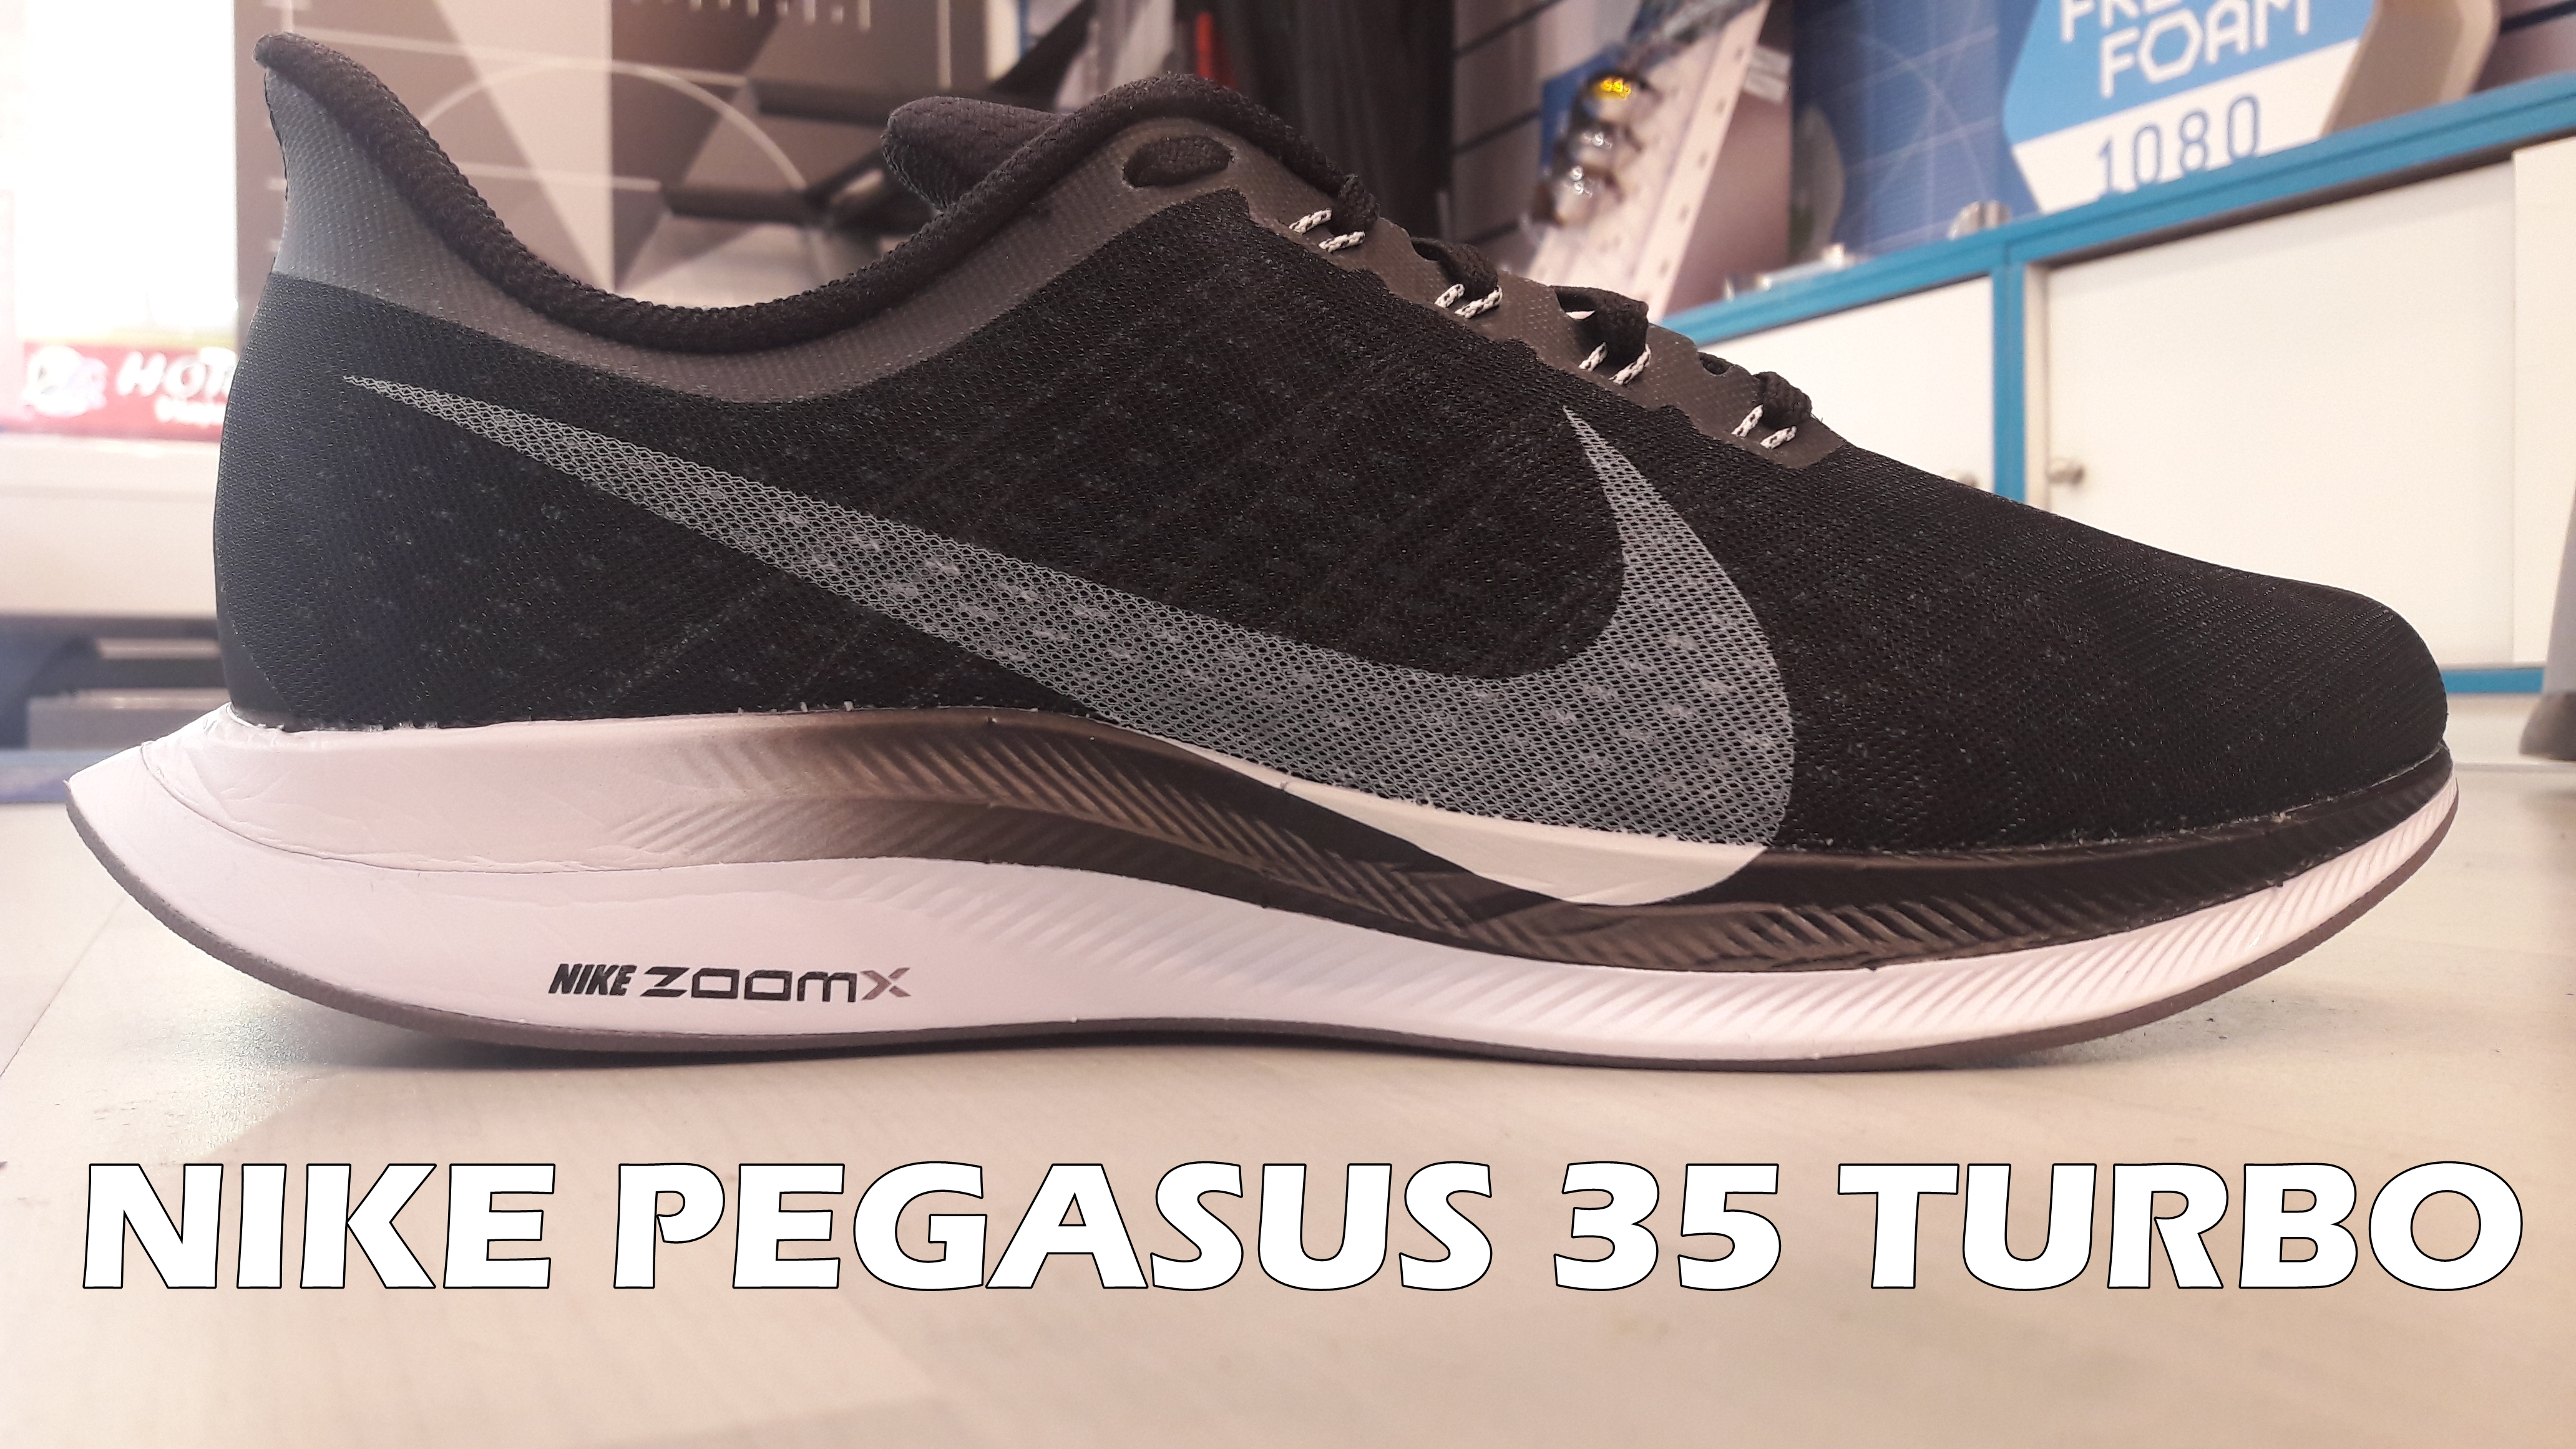 Nike Pegsus 35 turbo